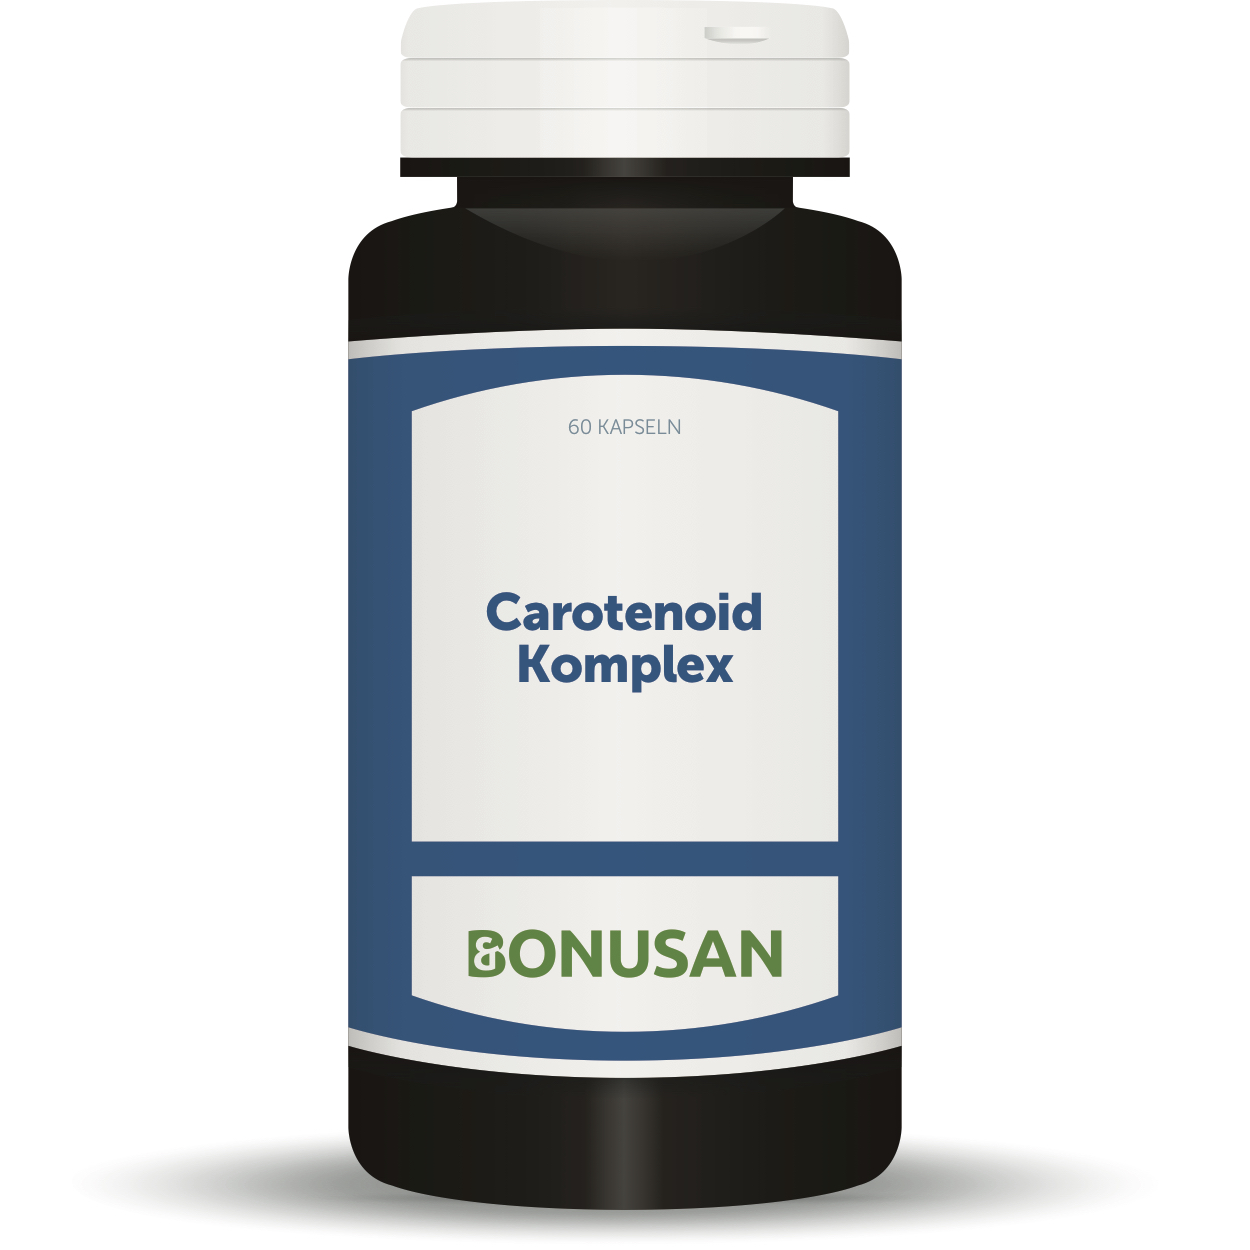 Carotenoid Komplex